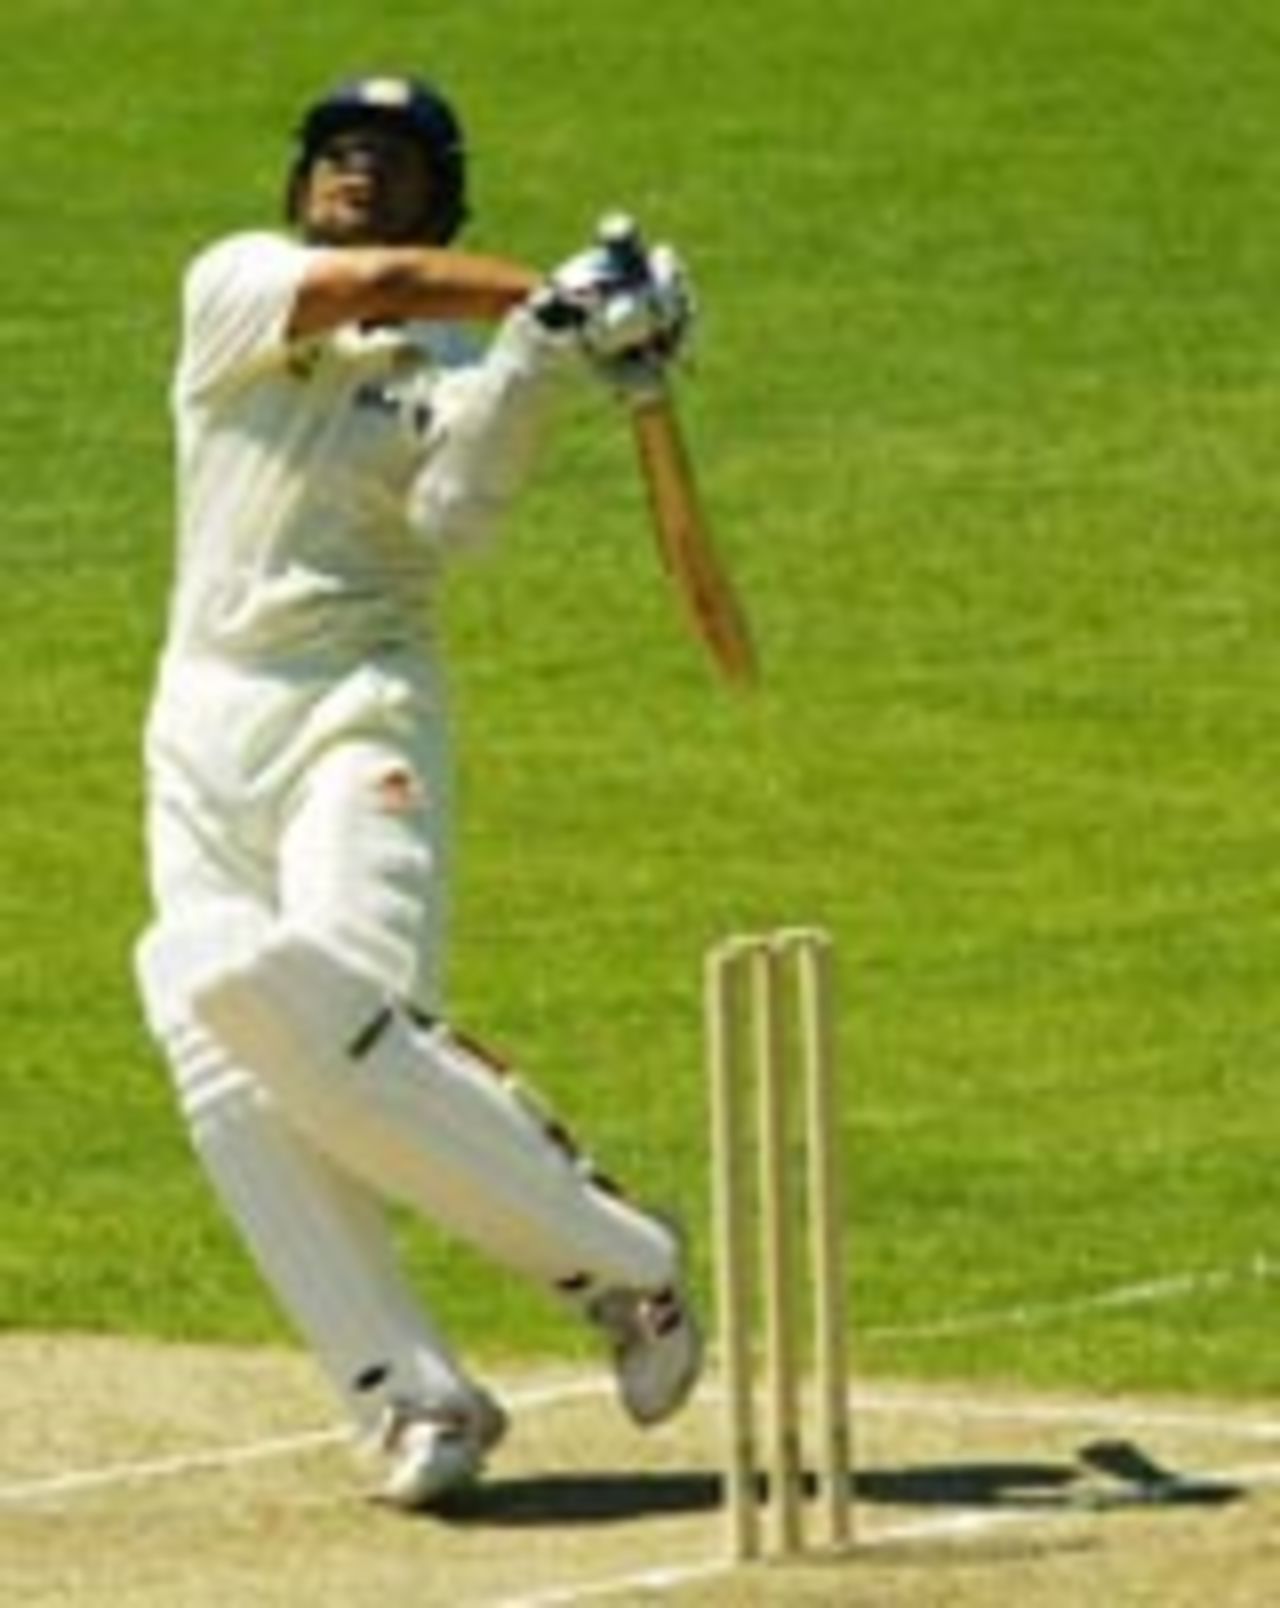 Sachin Tendulkar pulls, Victoria v Indians, Melbourne Cricket Ground, November 25, 2003